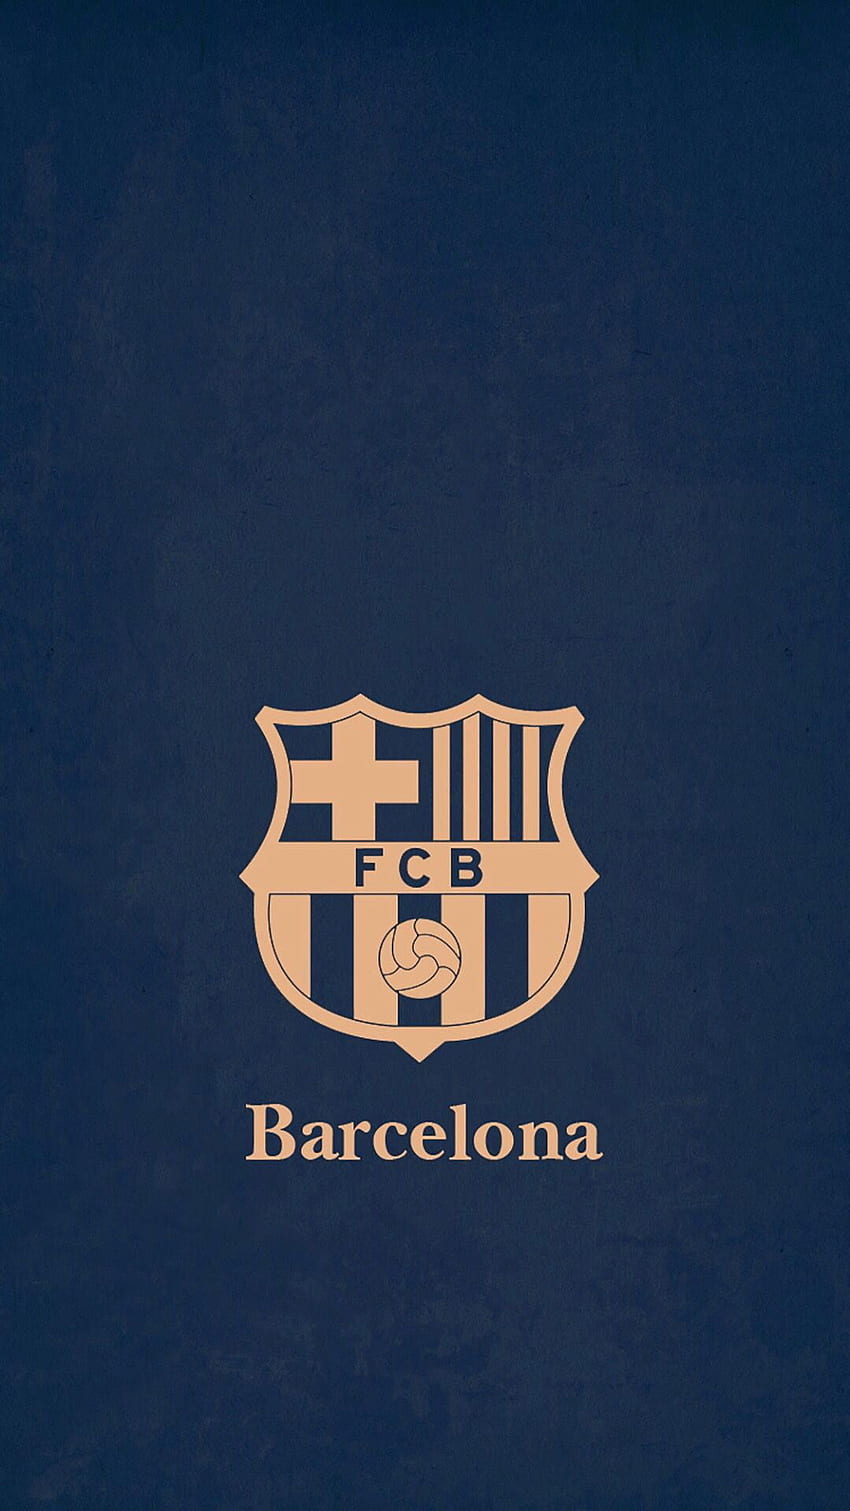 Latar belakang Fc Barcelona 2018 wallpaper ponsel HD